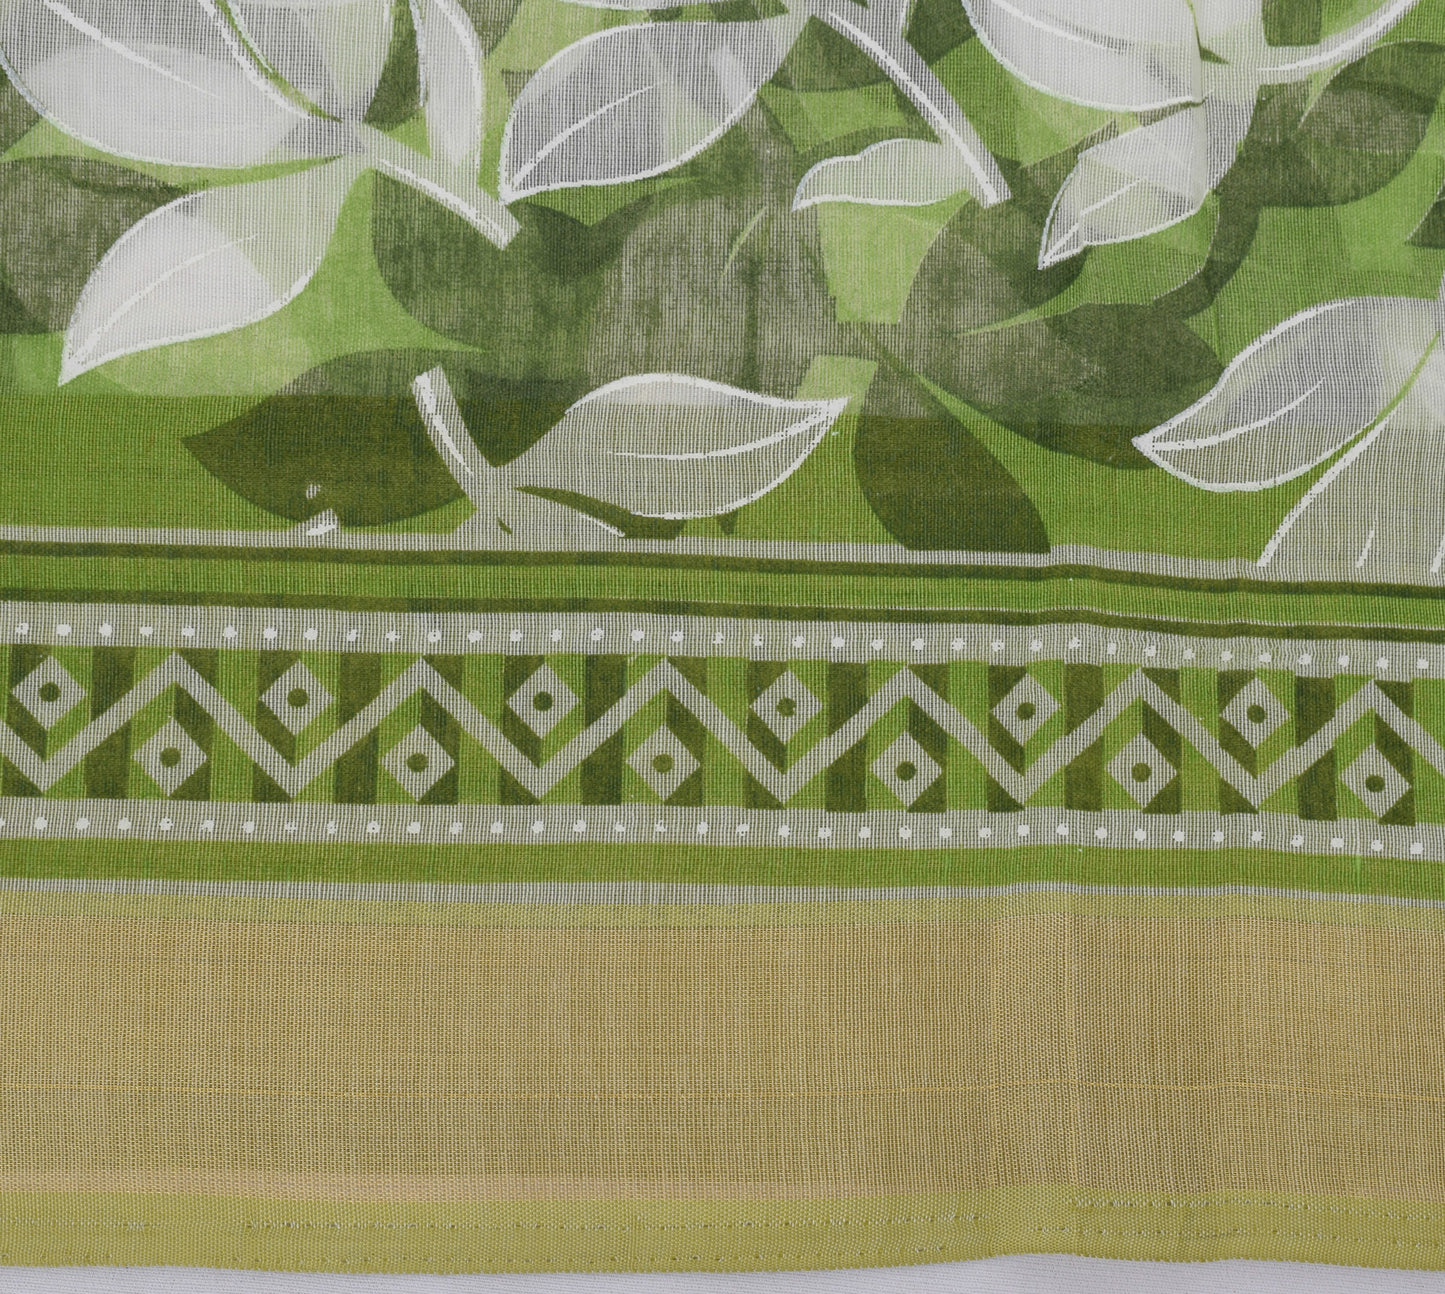 Sushila Vintage Green Saree Blend Cotton Printed Floral Soft Craft 5 Yard Fabric